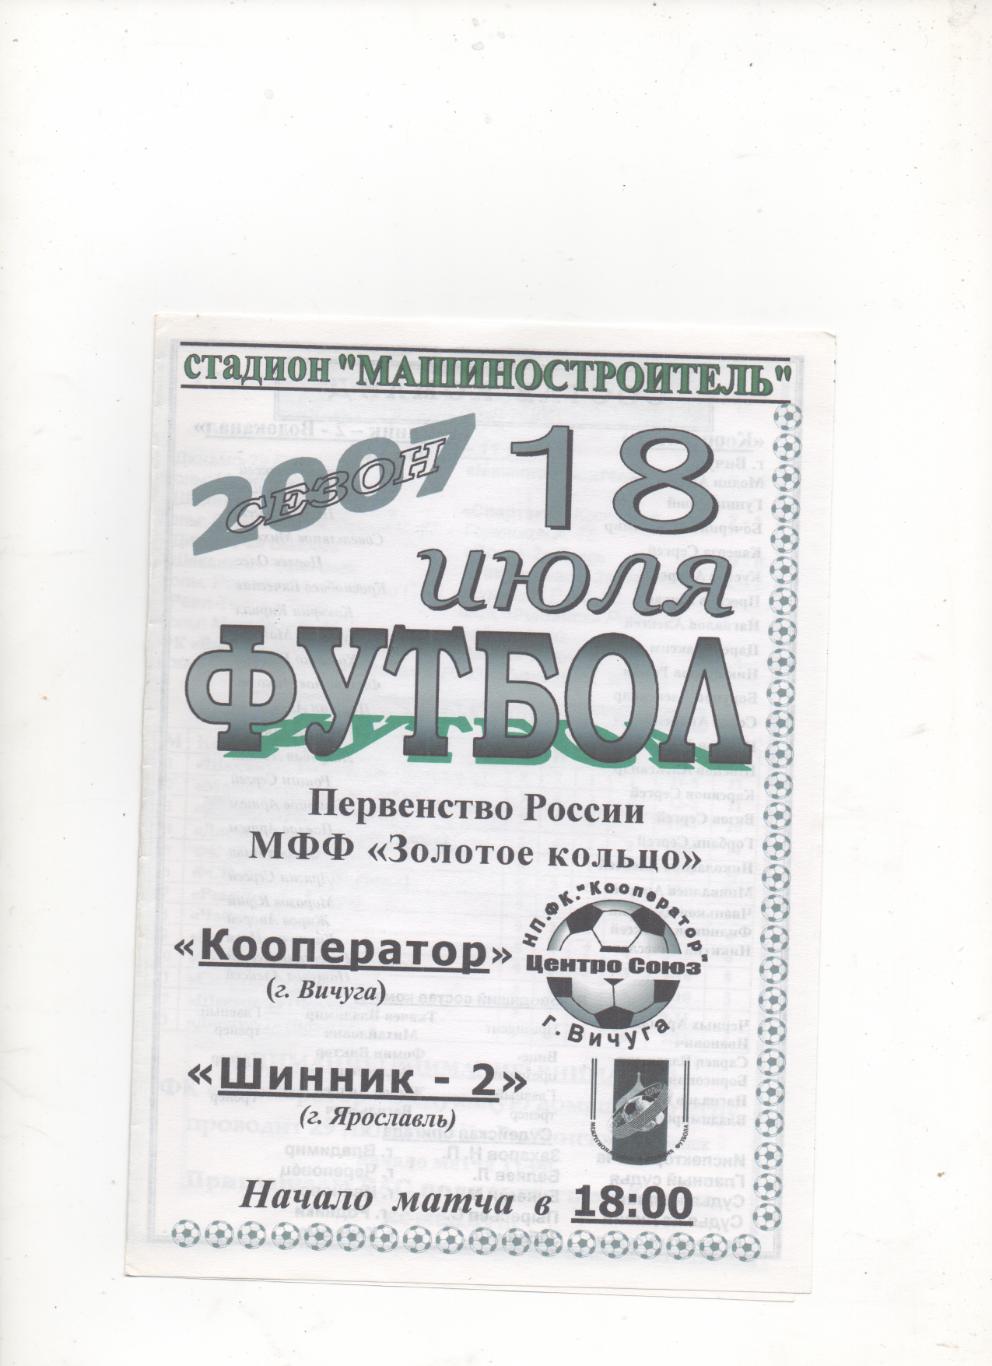 Кооператор (Вичуга) - Шинник-2 (Ярославль) - 2007.